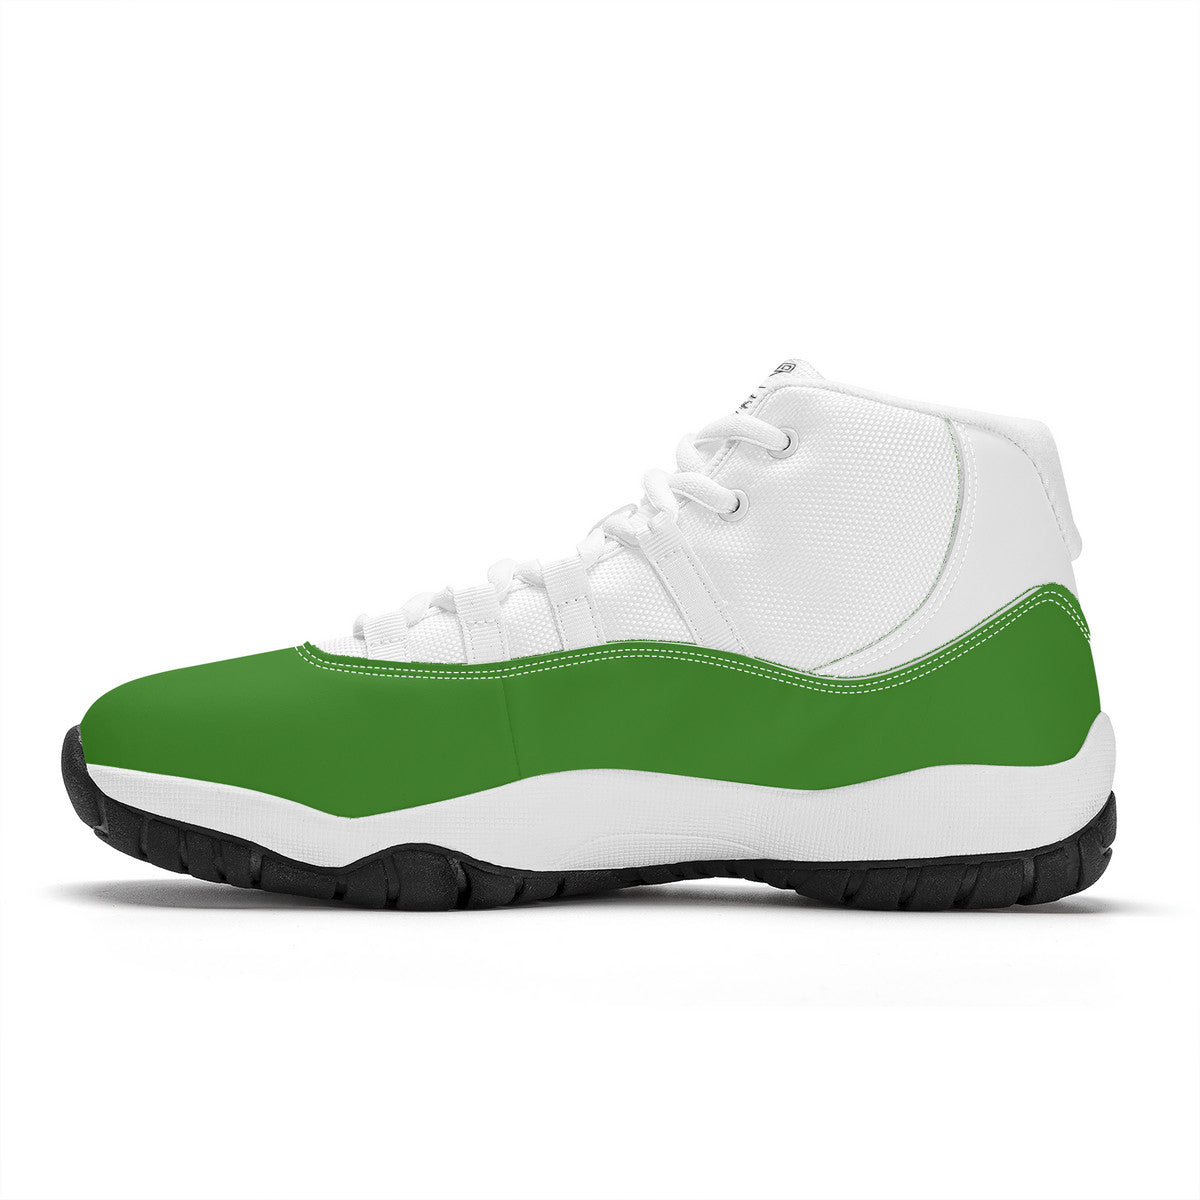 Green  High Top Air Retro Sneakers